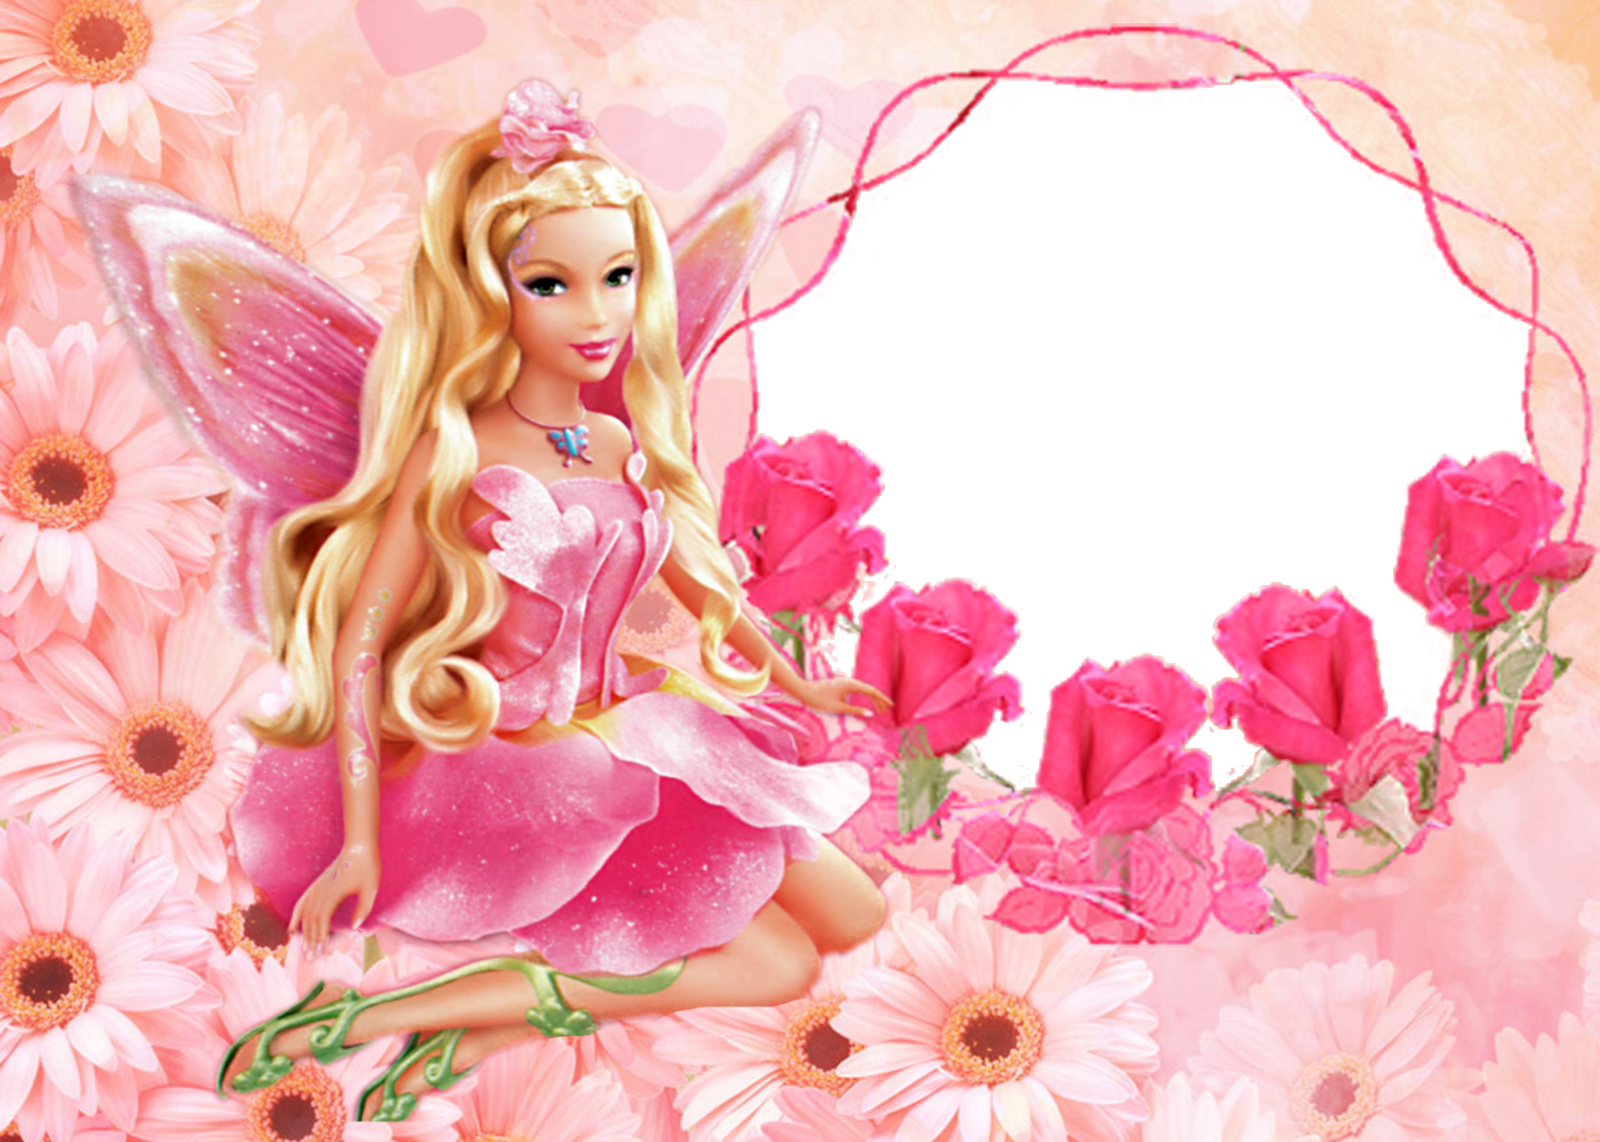 Barbie Doll Wallpaper Photos New #2743 Wallpaper | High Quality ...